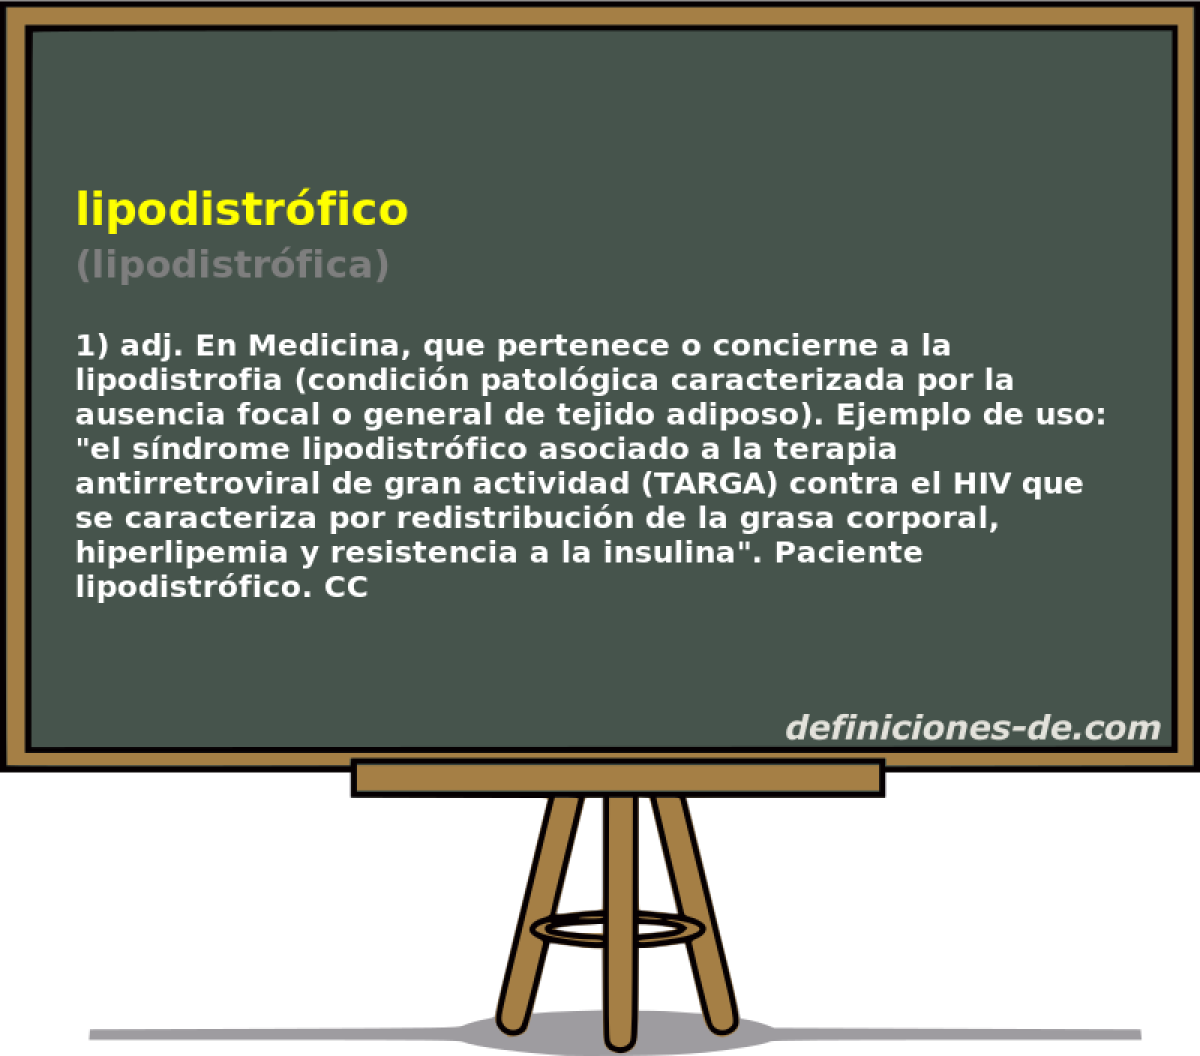 lipodistrfico (lipodistrfica)